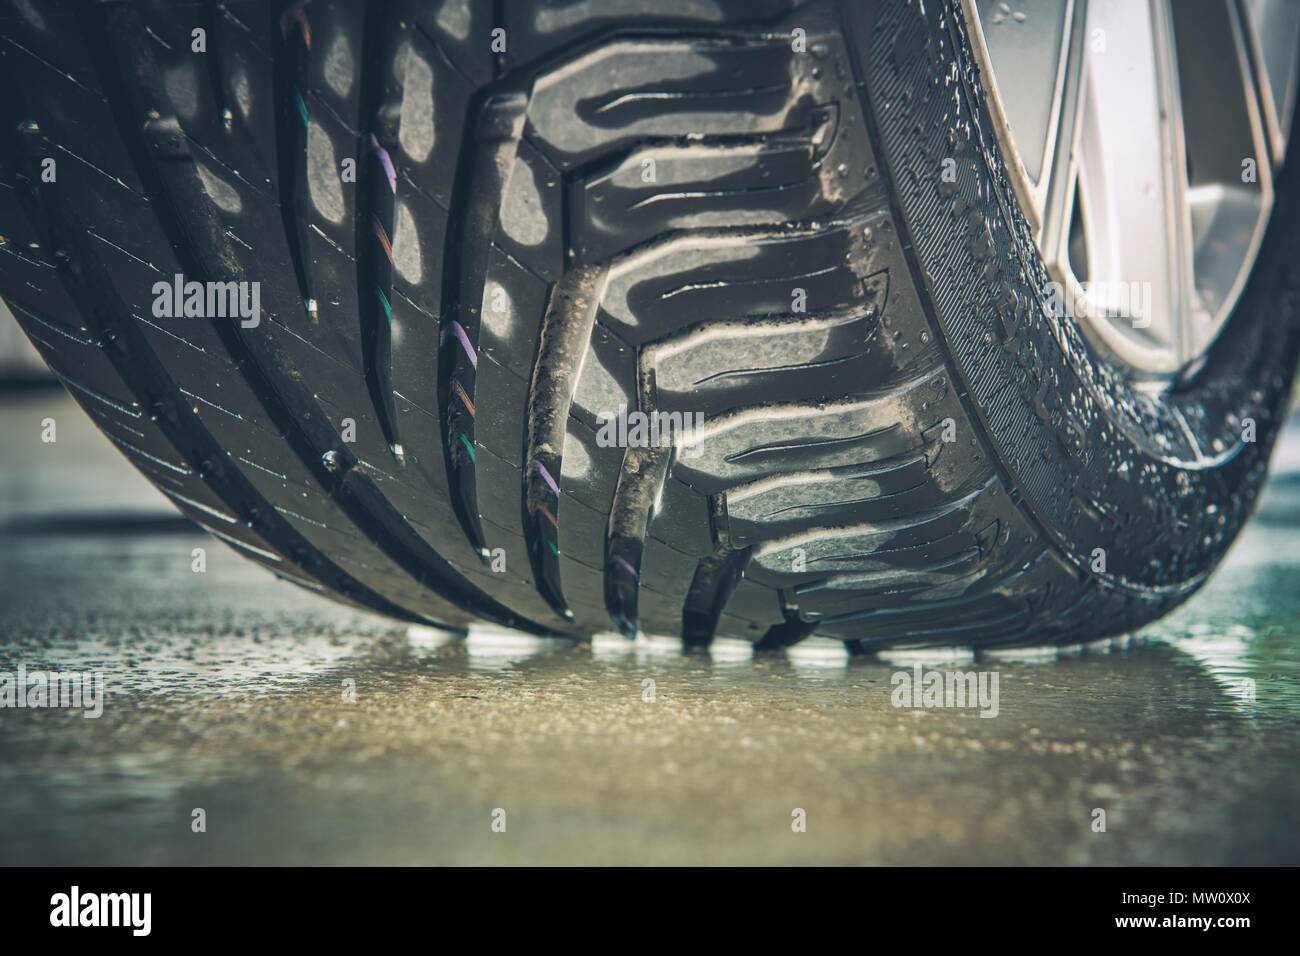 Brandneue Fahrzeug Reifenprofil closeup Foto. Auto Rad auf den nassen Asphalt. Stockfoto